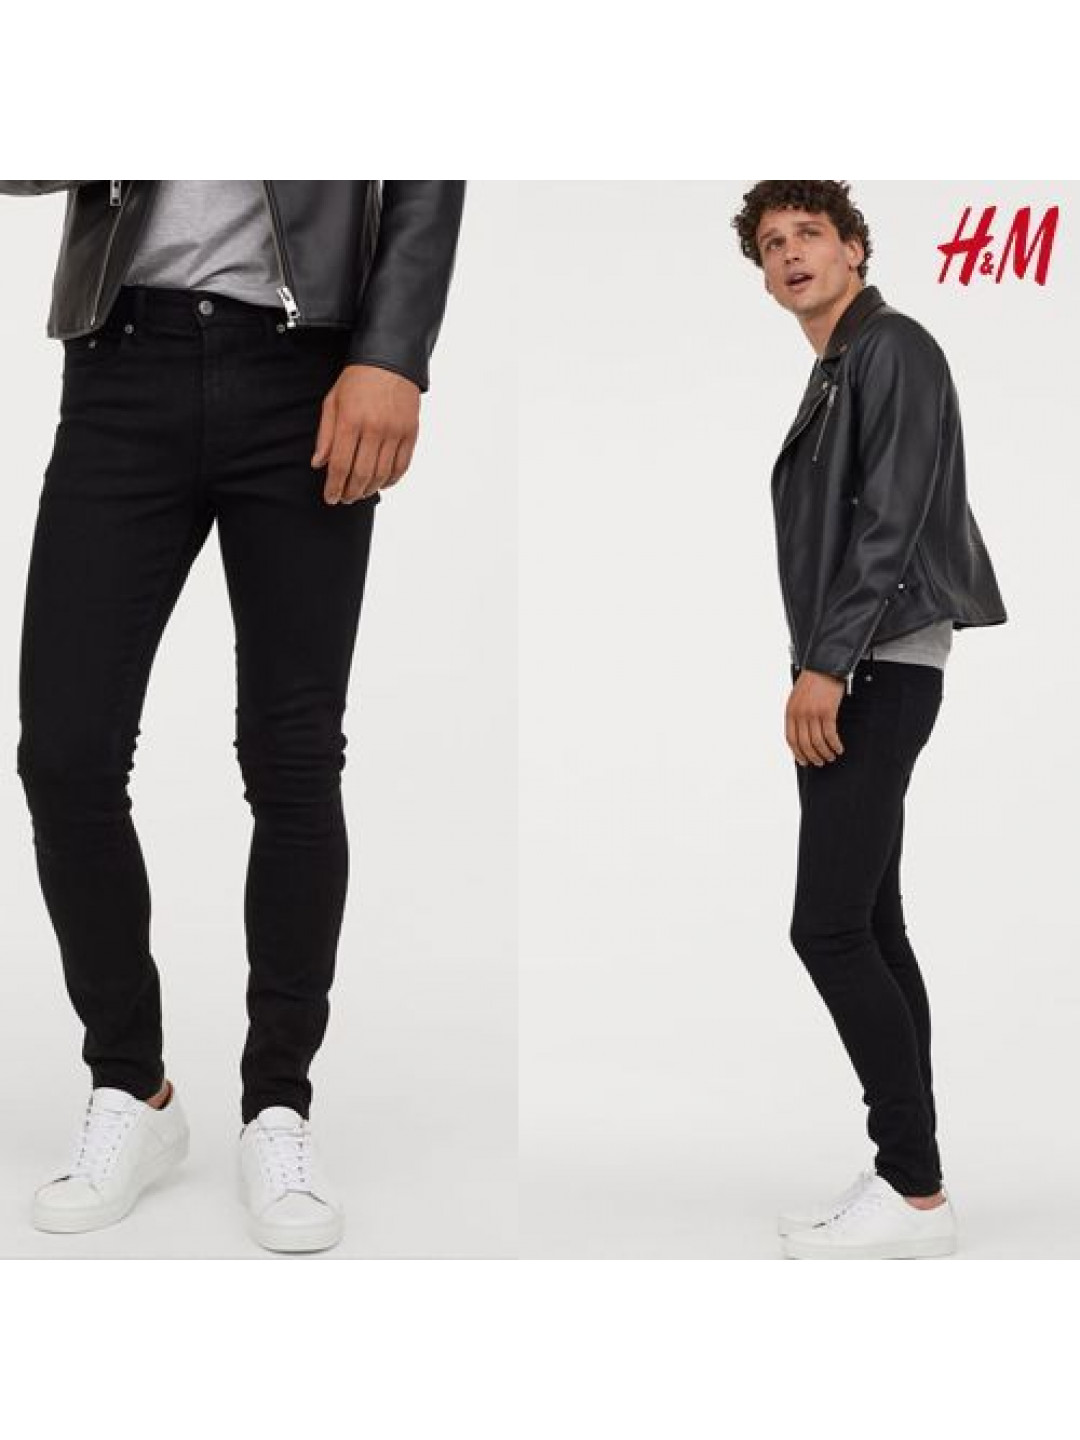 h&m slim fit jeans mens